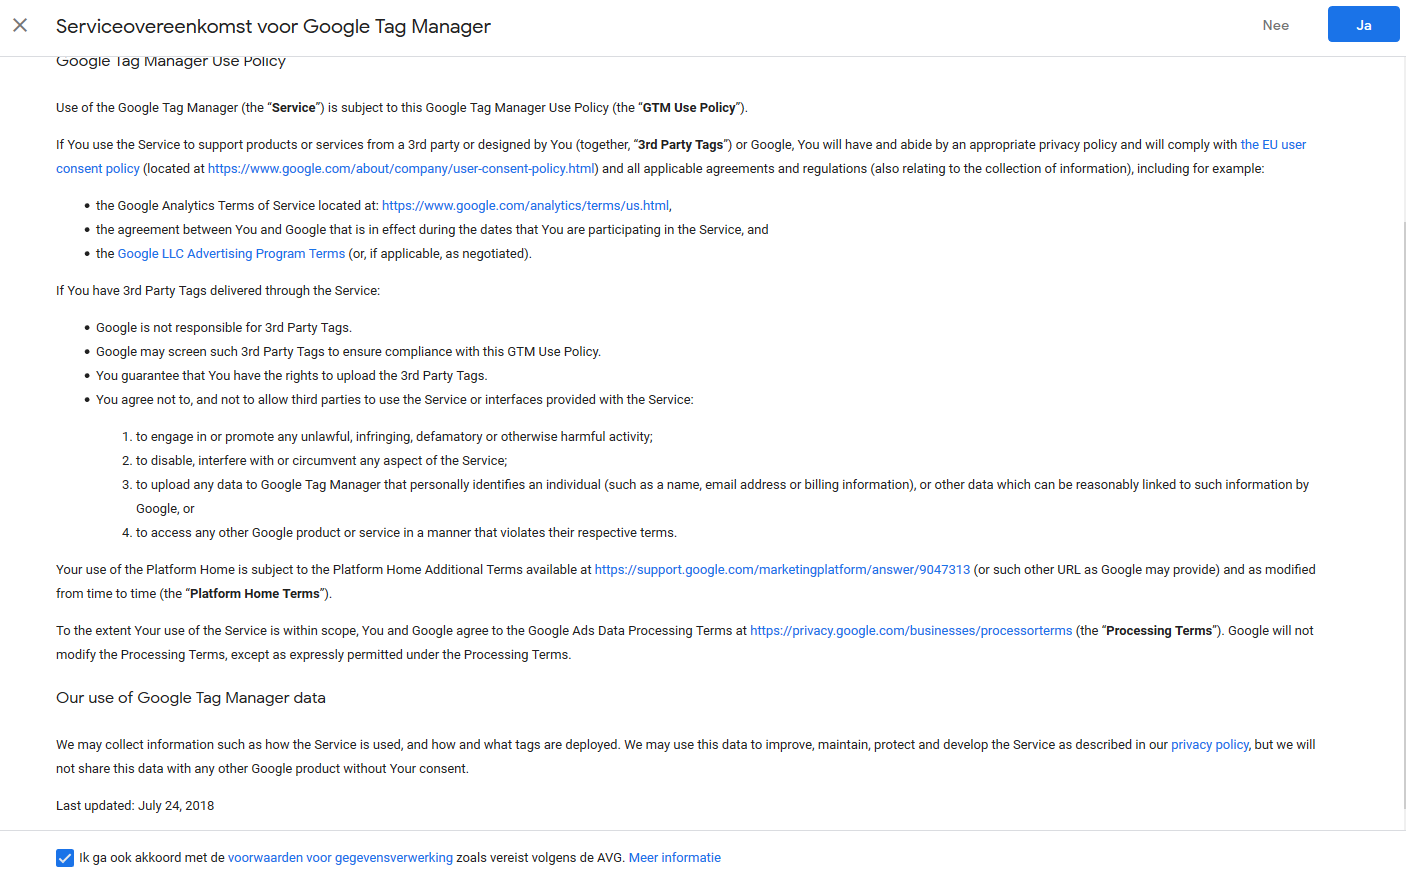 Google tag manager - serviceovereenkomst 2021